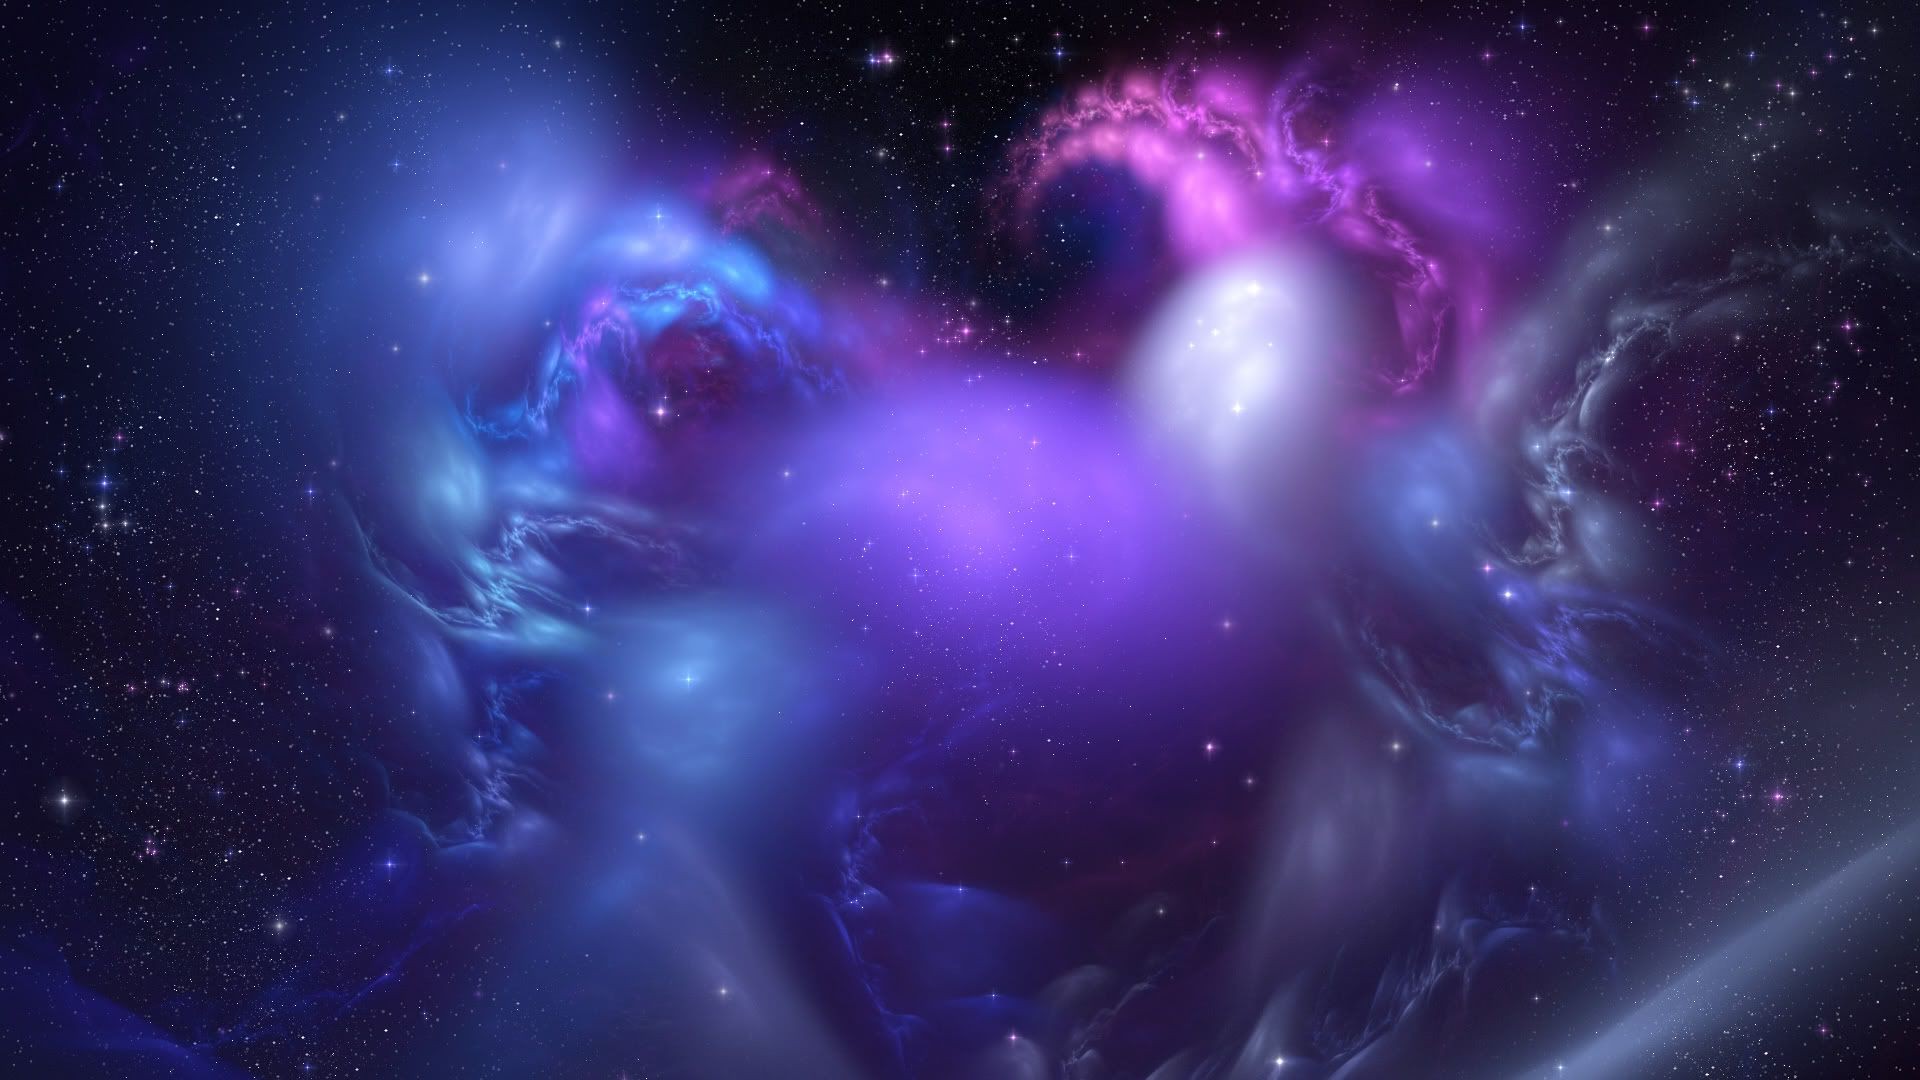 estrellas de pantalla en vivo,púrpura,espacio exterior,violeta,cielo,objeto astronómico